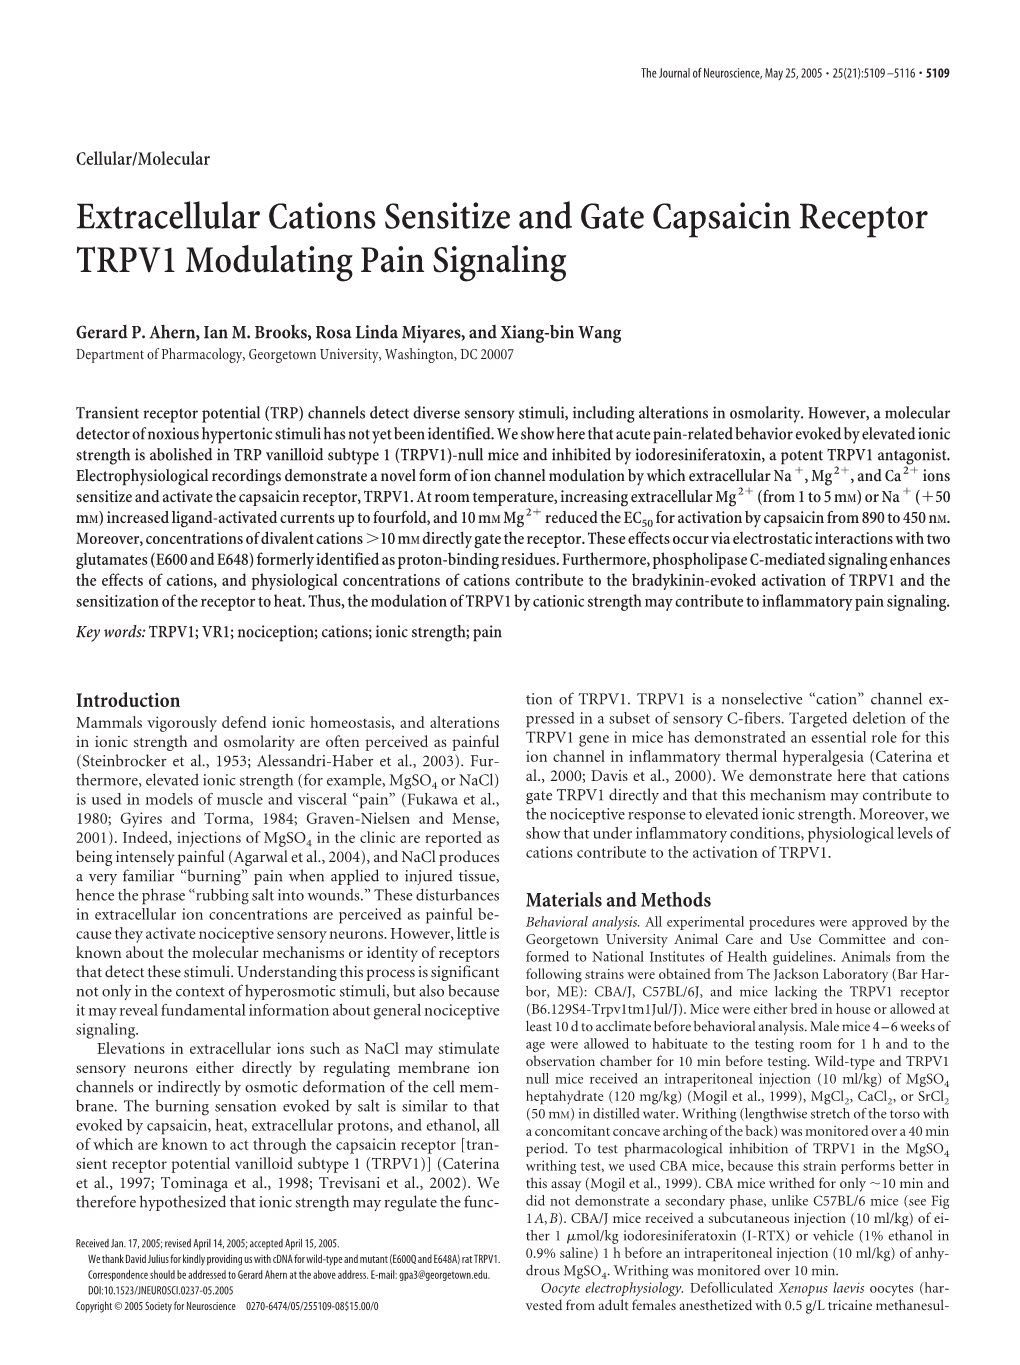 Extracellular Cations Sensitize and Gate Capsaicin Receptor TRPV1 Modulating Pain Signaling